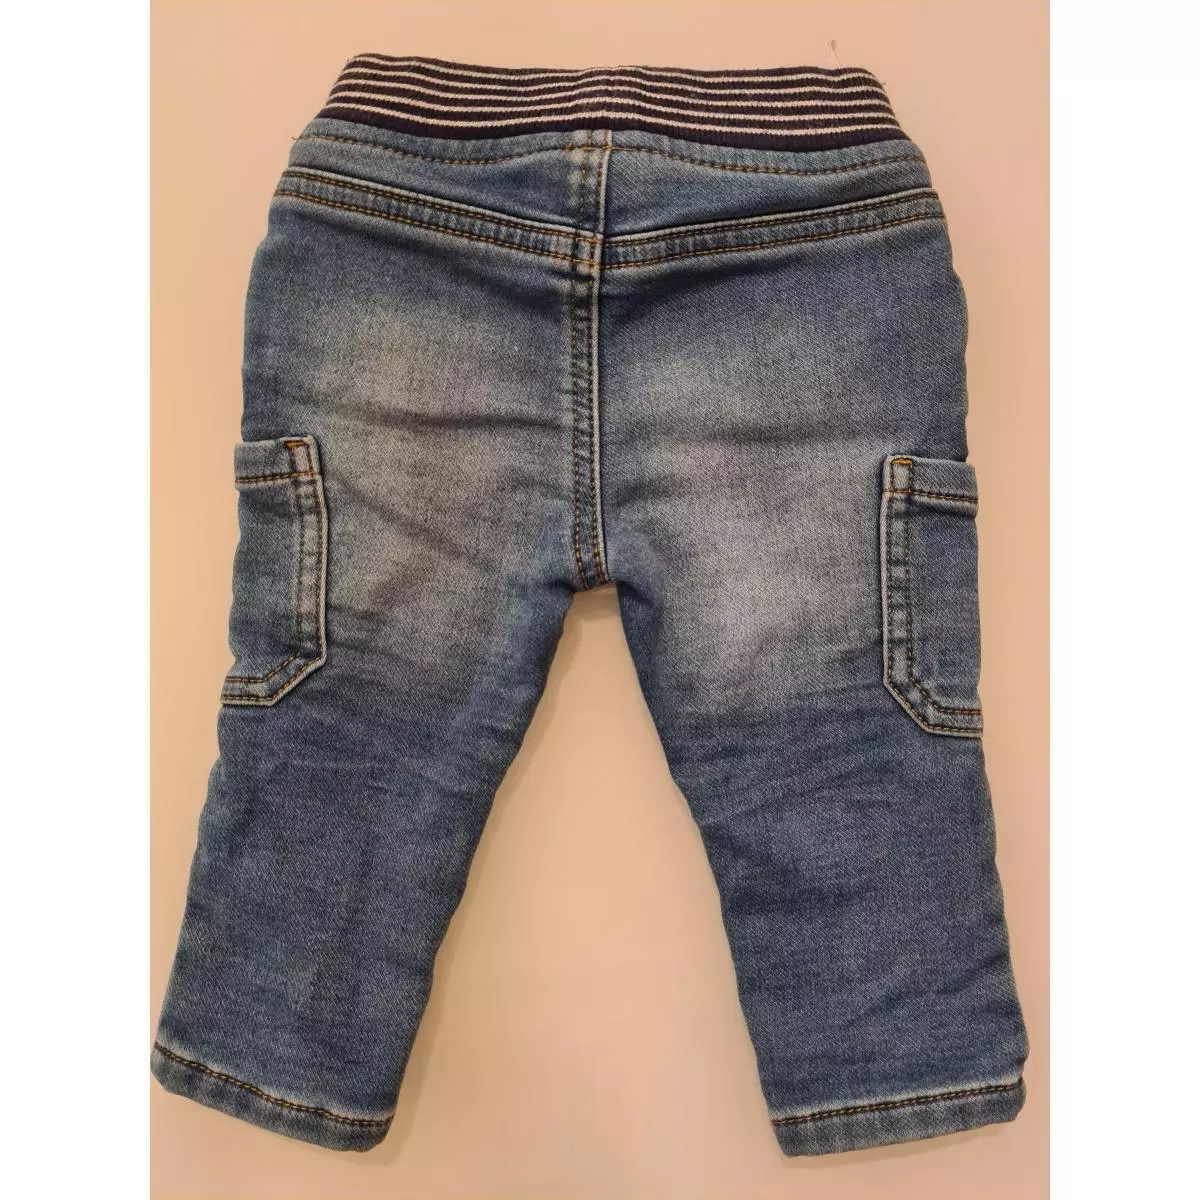 CA jeans hlače za fantka št. 74 - 2